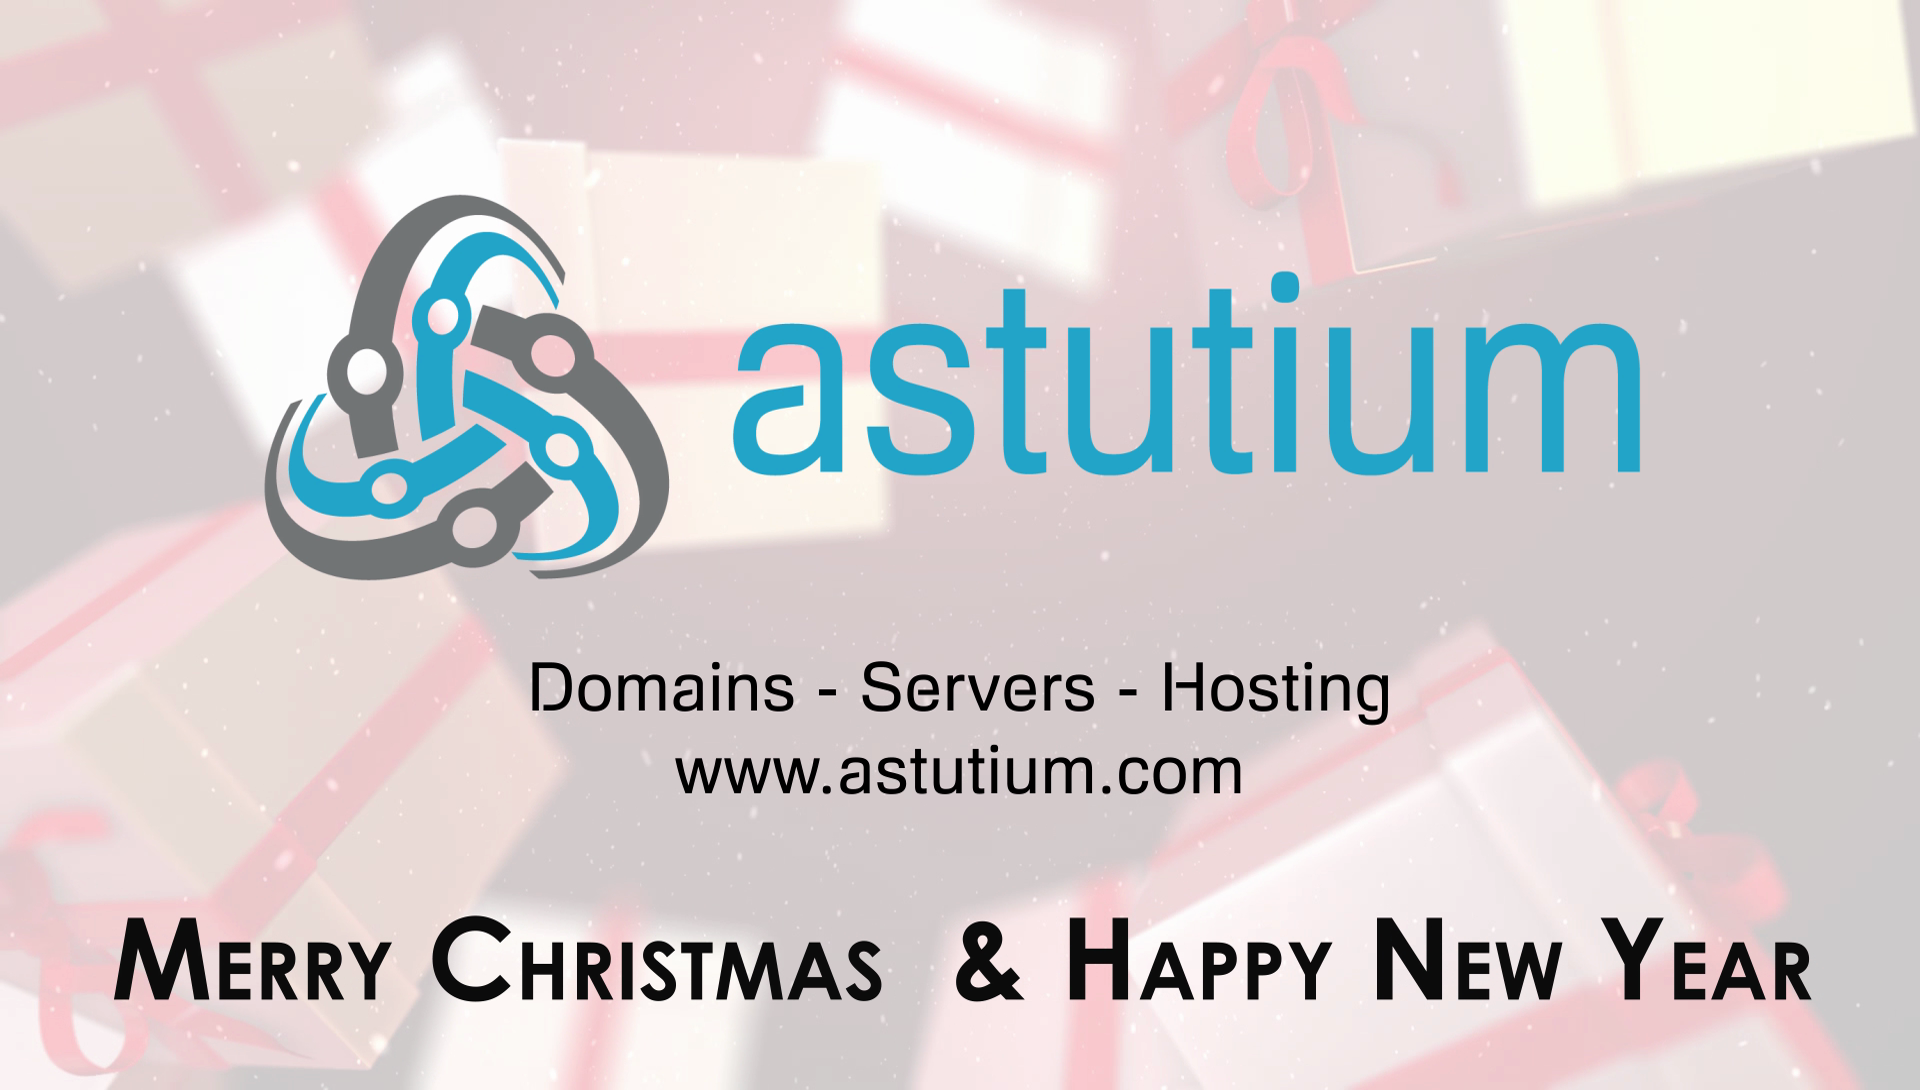 Astutium Christmas Card Preview